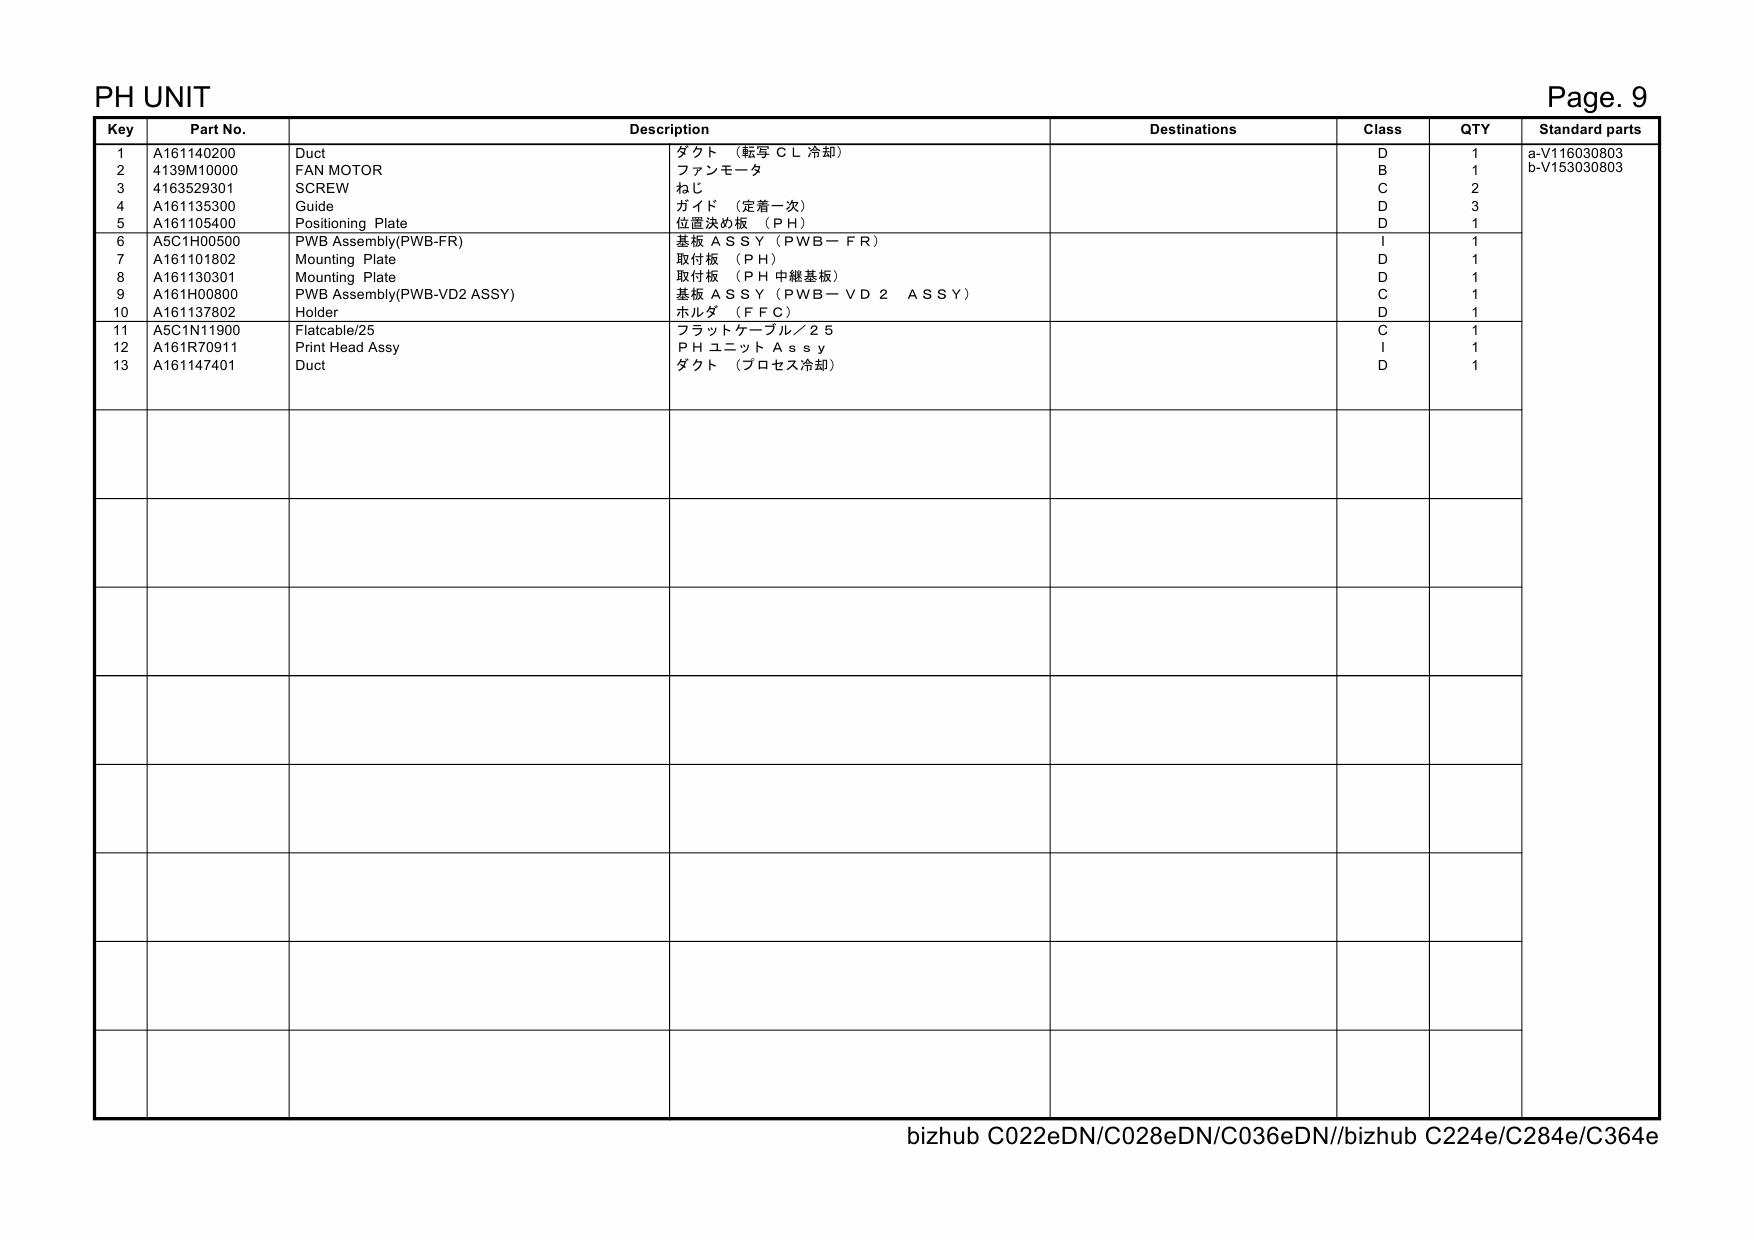 Konica-Minolta bizhub C224e C284e C364e Parts Manual-5